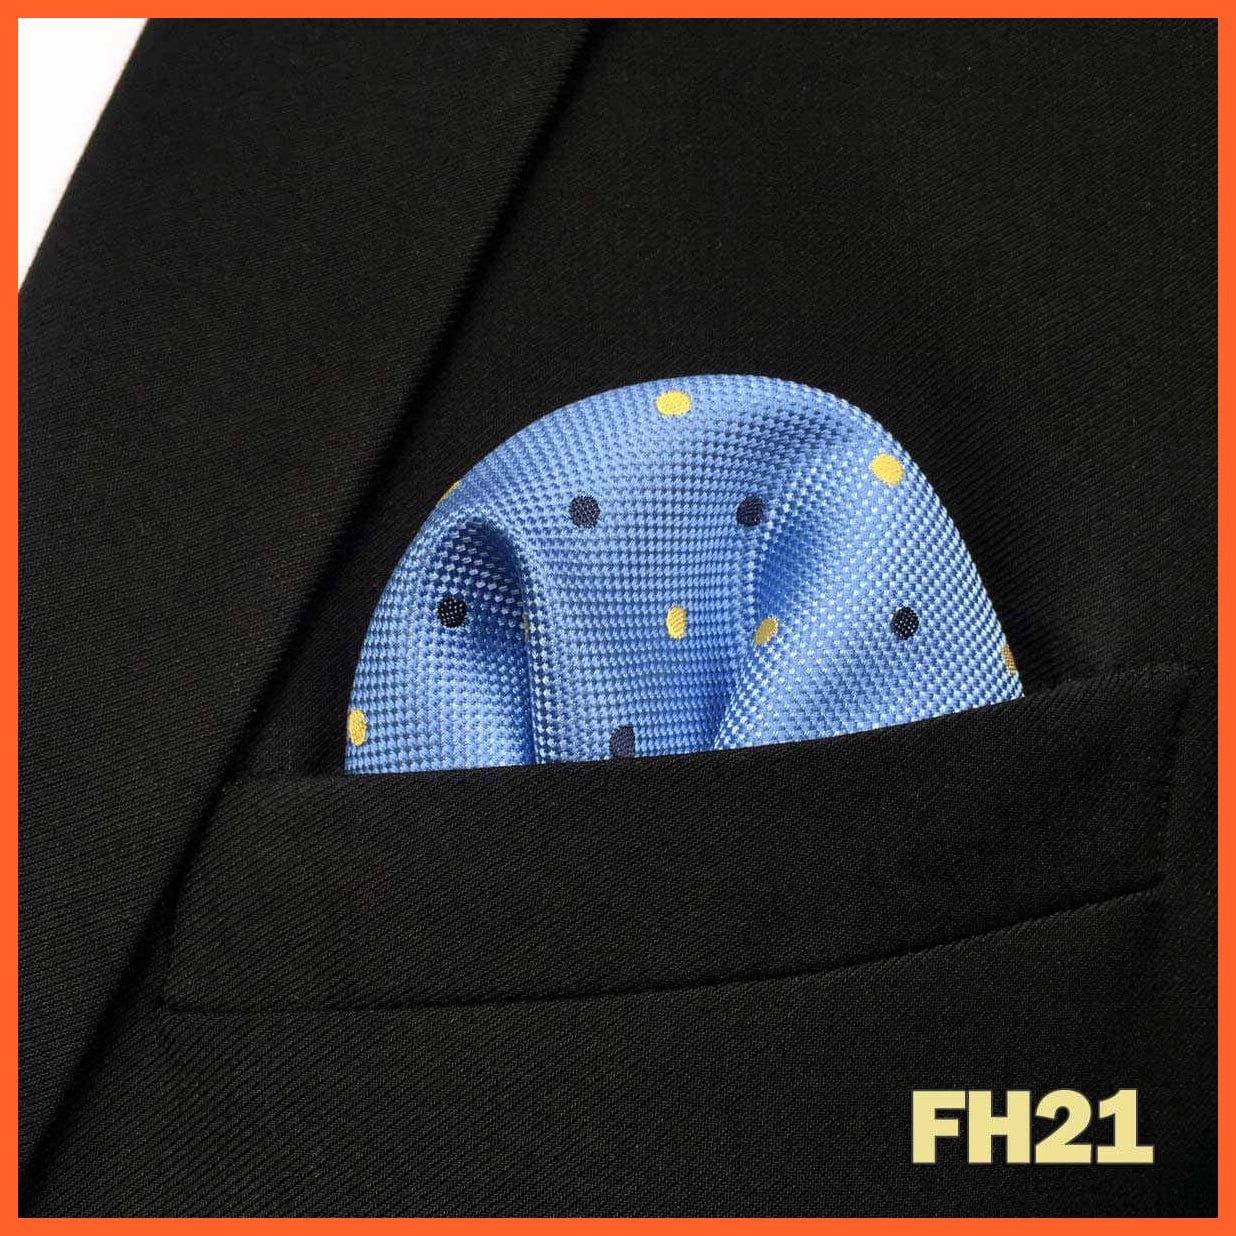 whatagift.com.au Handkerchief FH21 Colorful Multicolor Pocket Square Men's Classic Striped Handkerchief